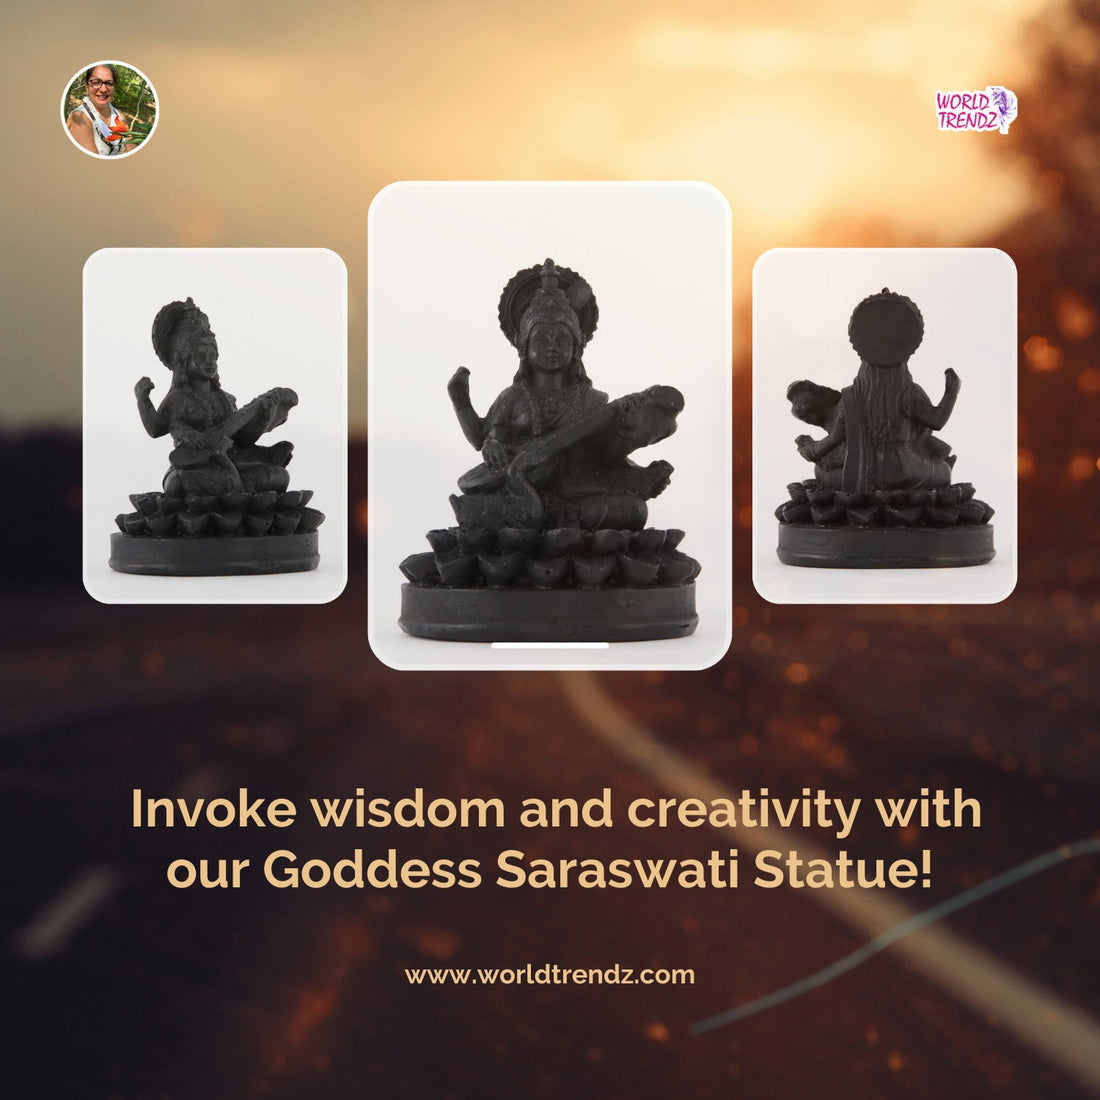 The Beauty and Wisdom: The Allure of the Dark Small Goddess Saraswati Statue